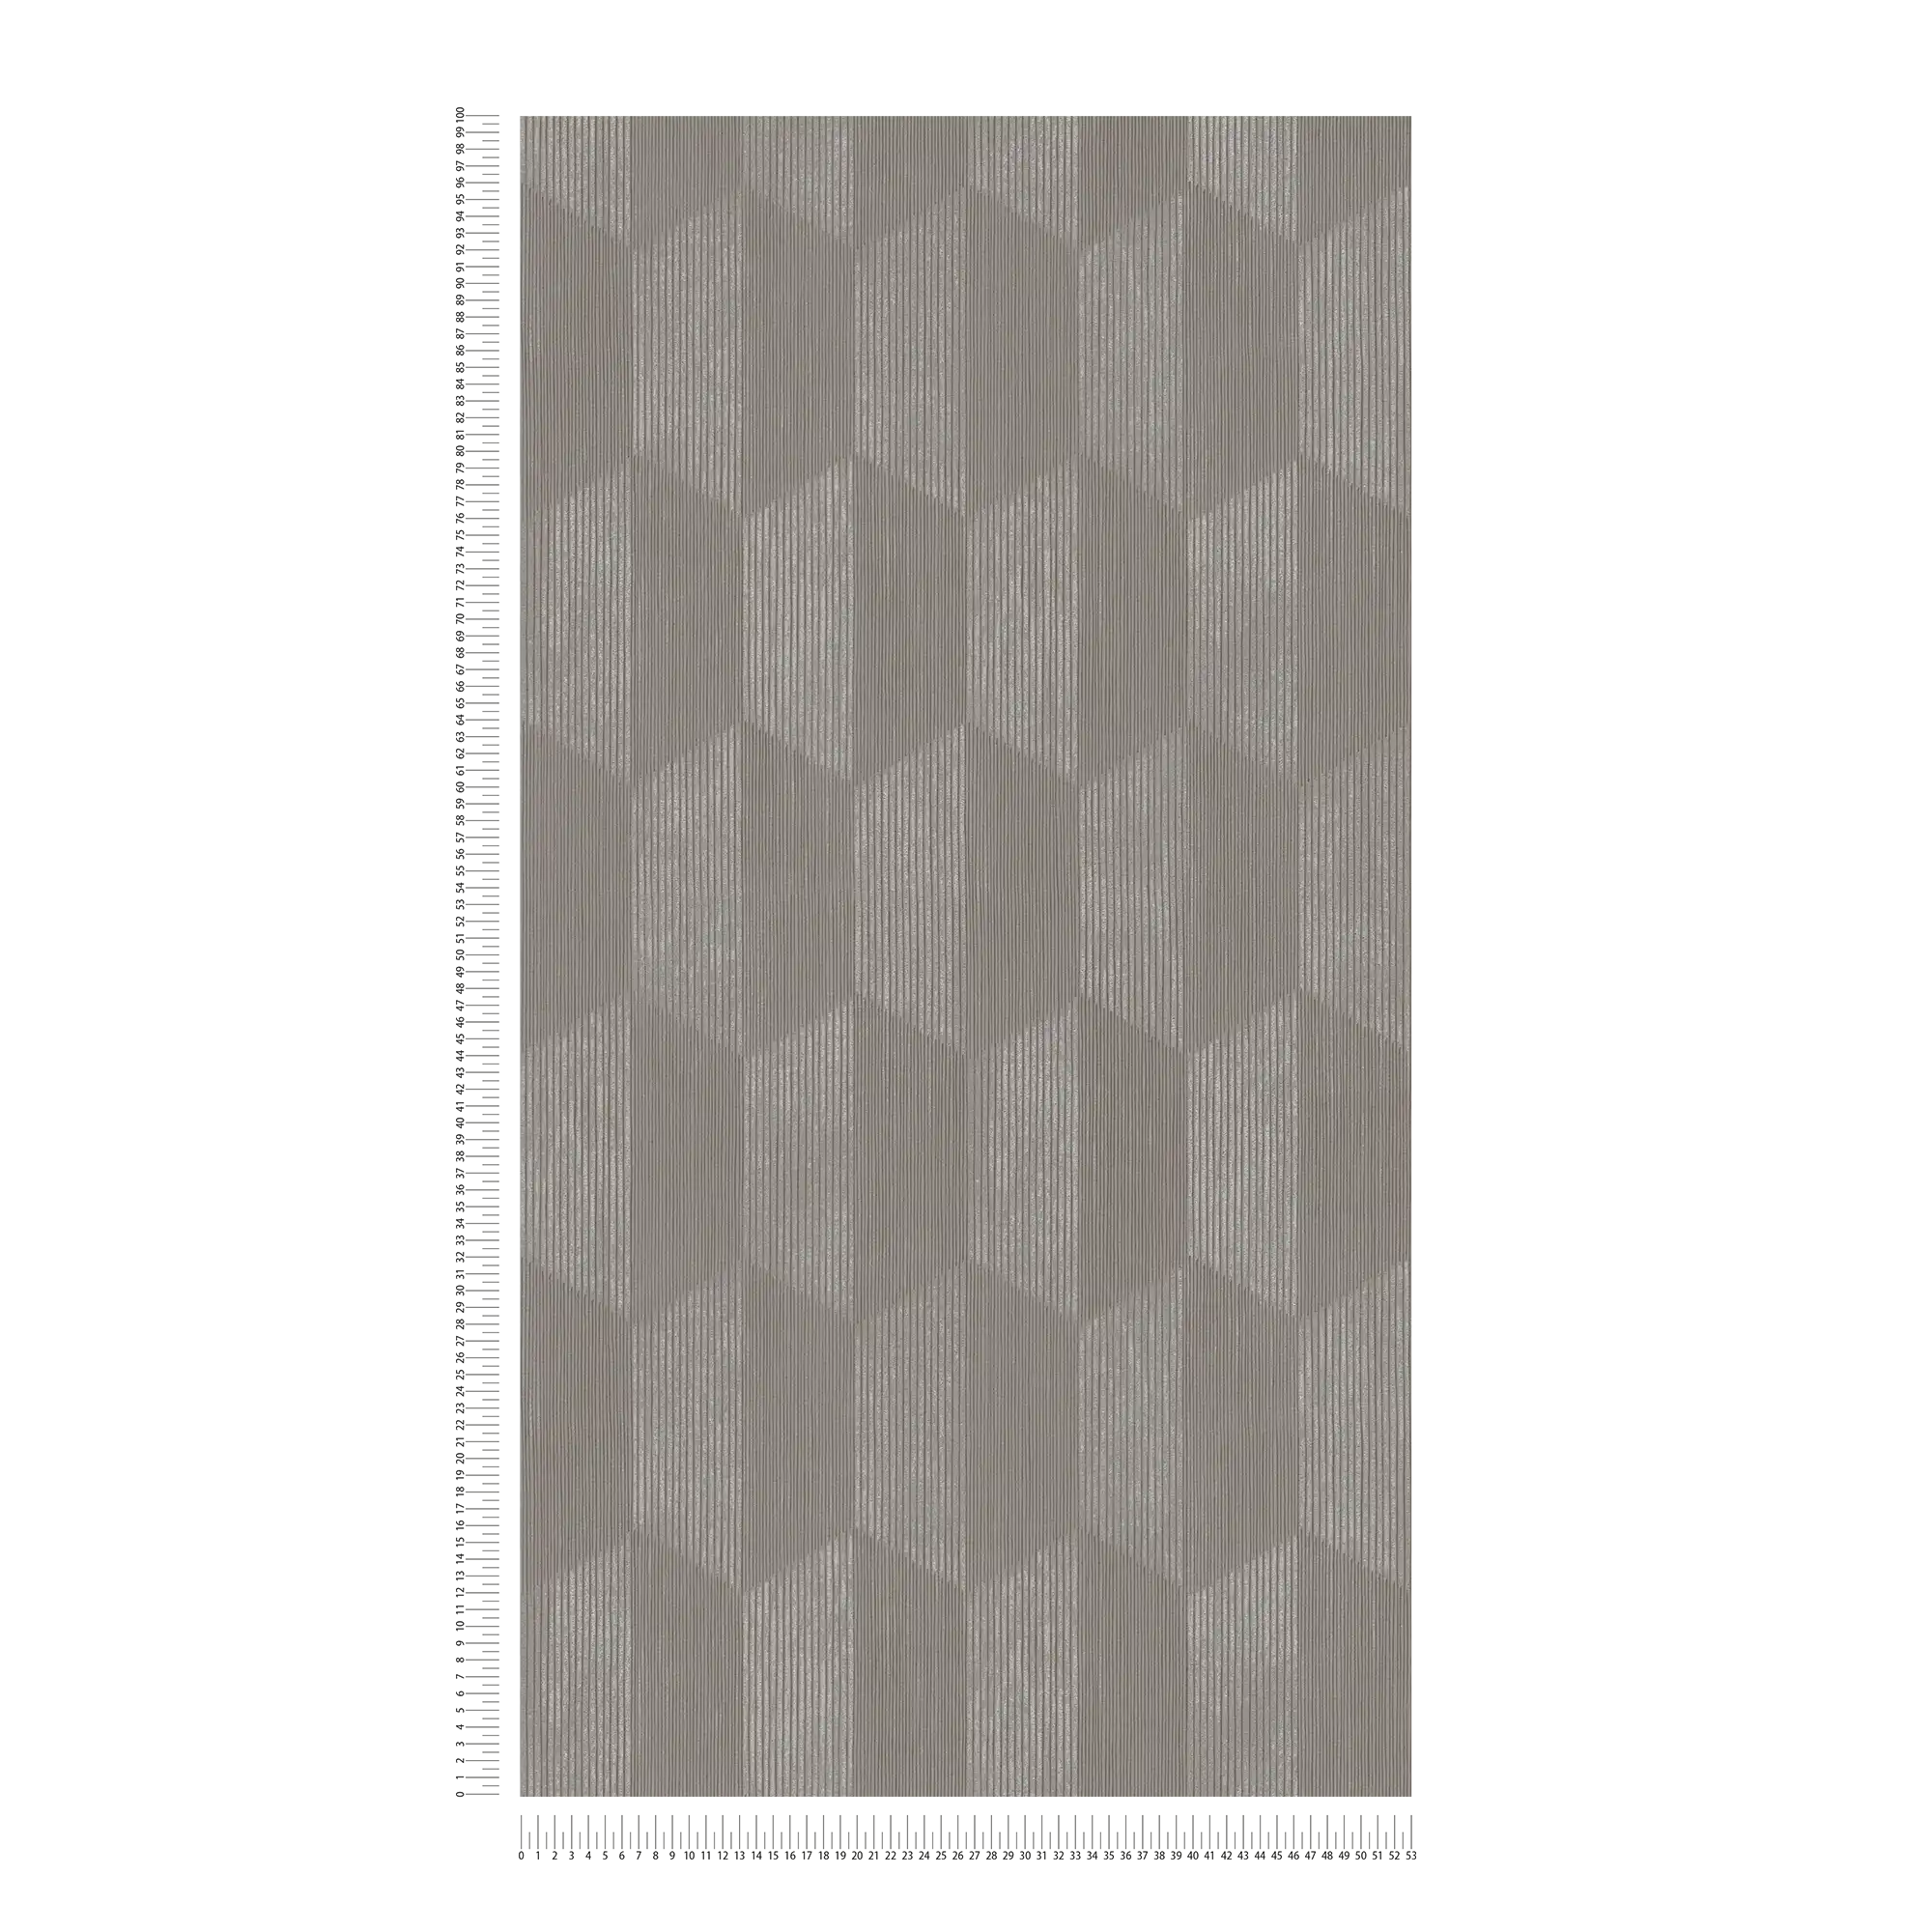             Strukturtapete mit 3D Grafik Muster – Grau, Beige
        